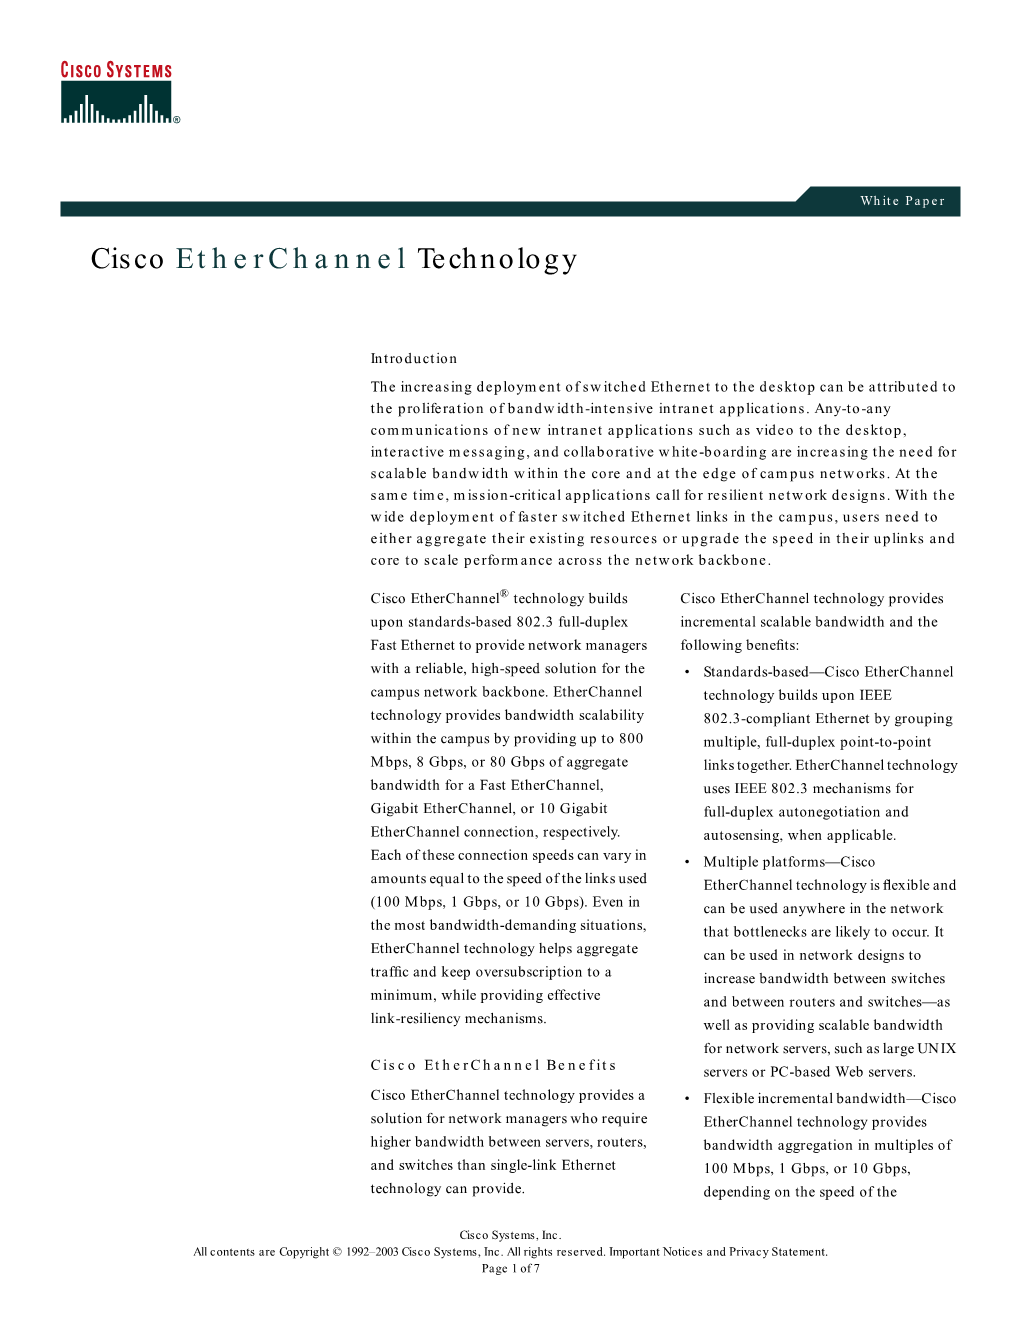 Cisco Etherchannel Technology